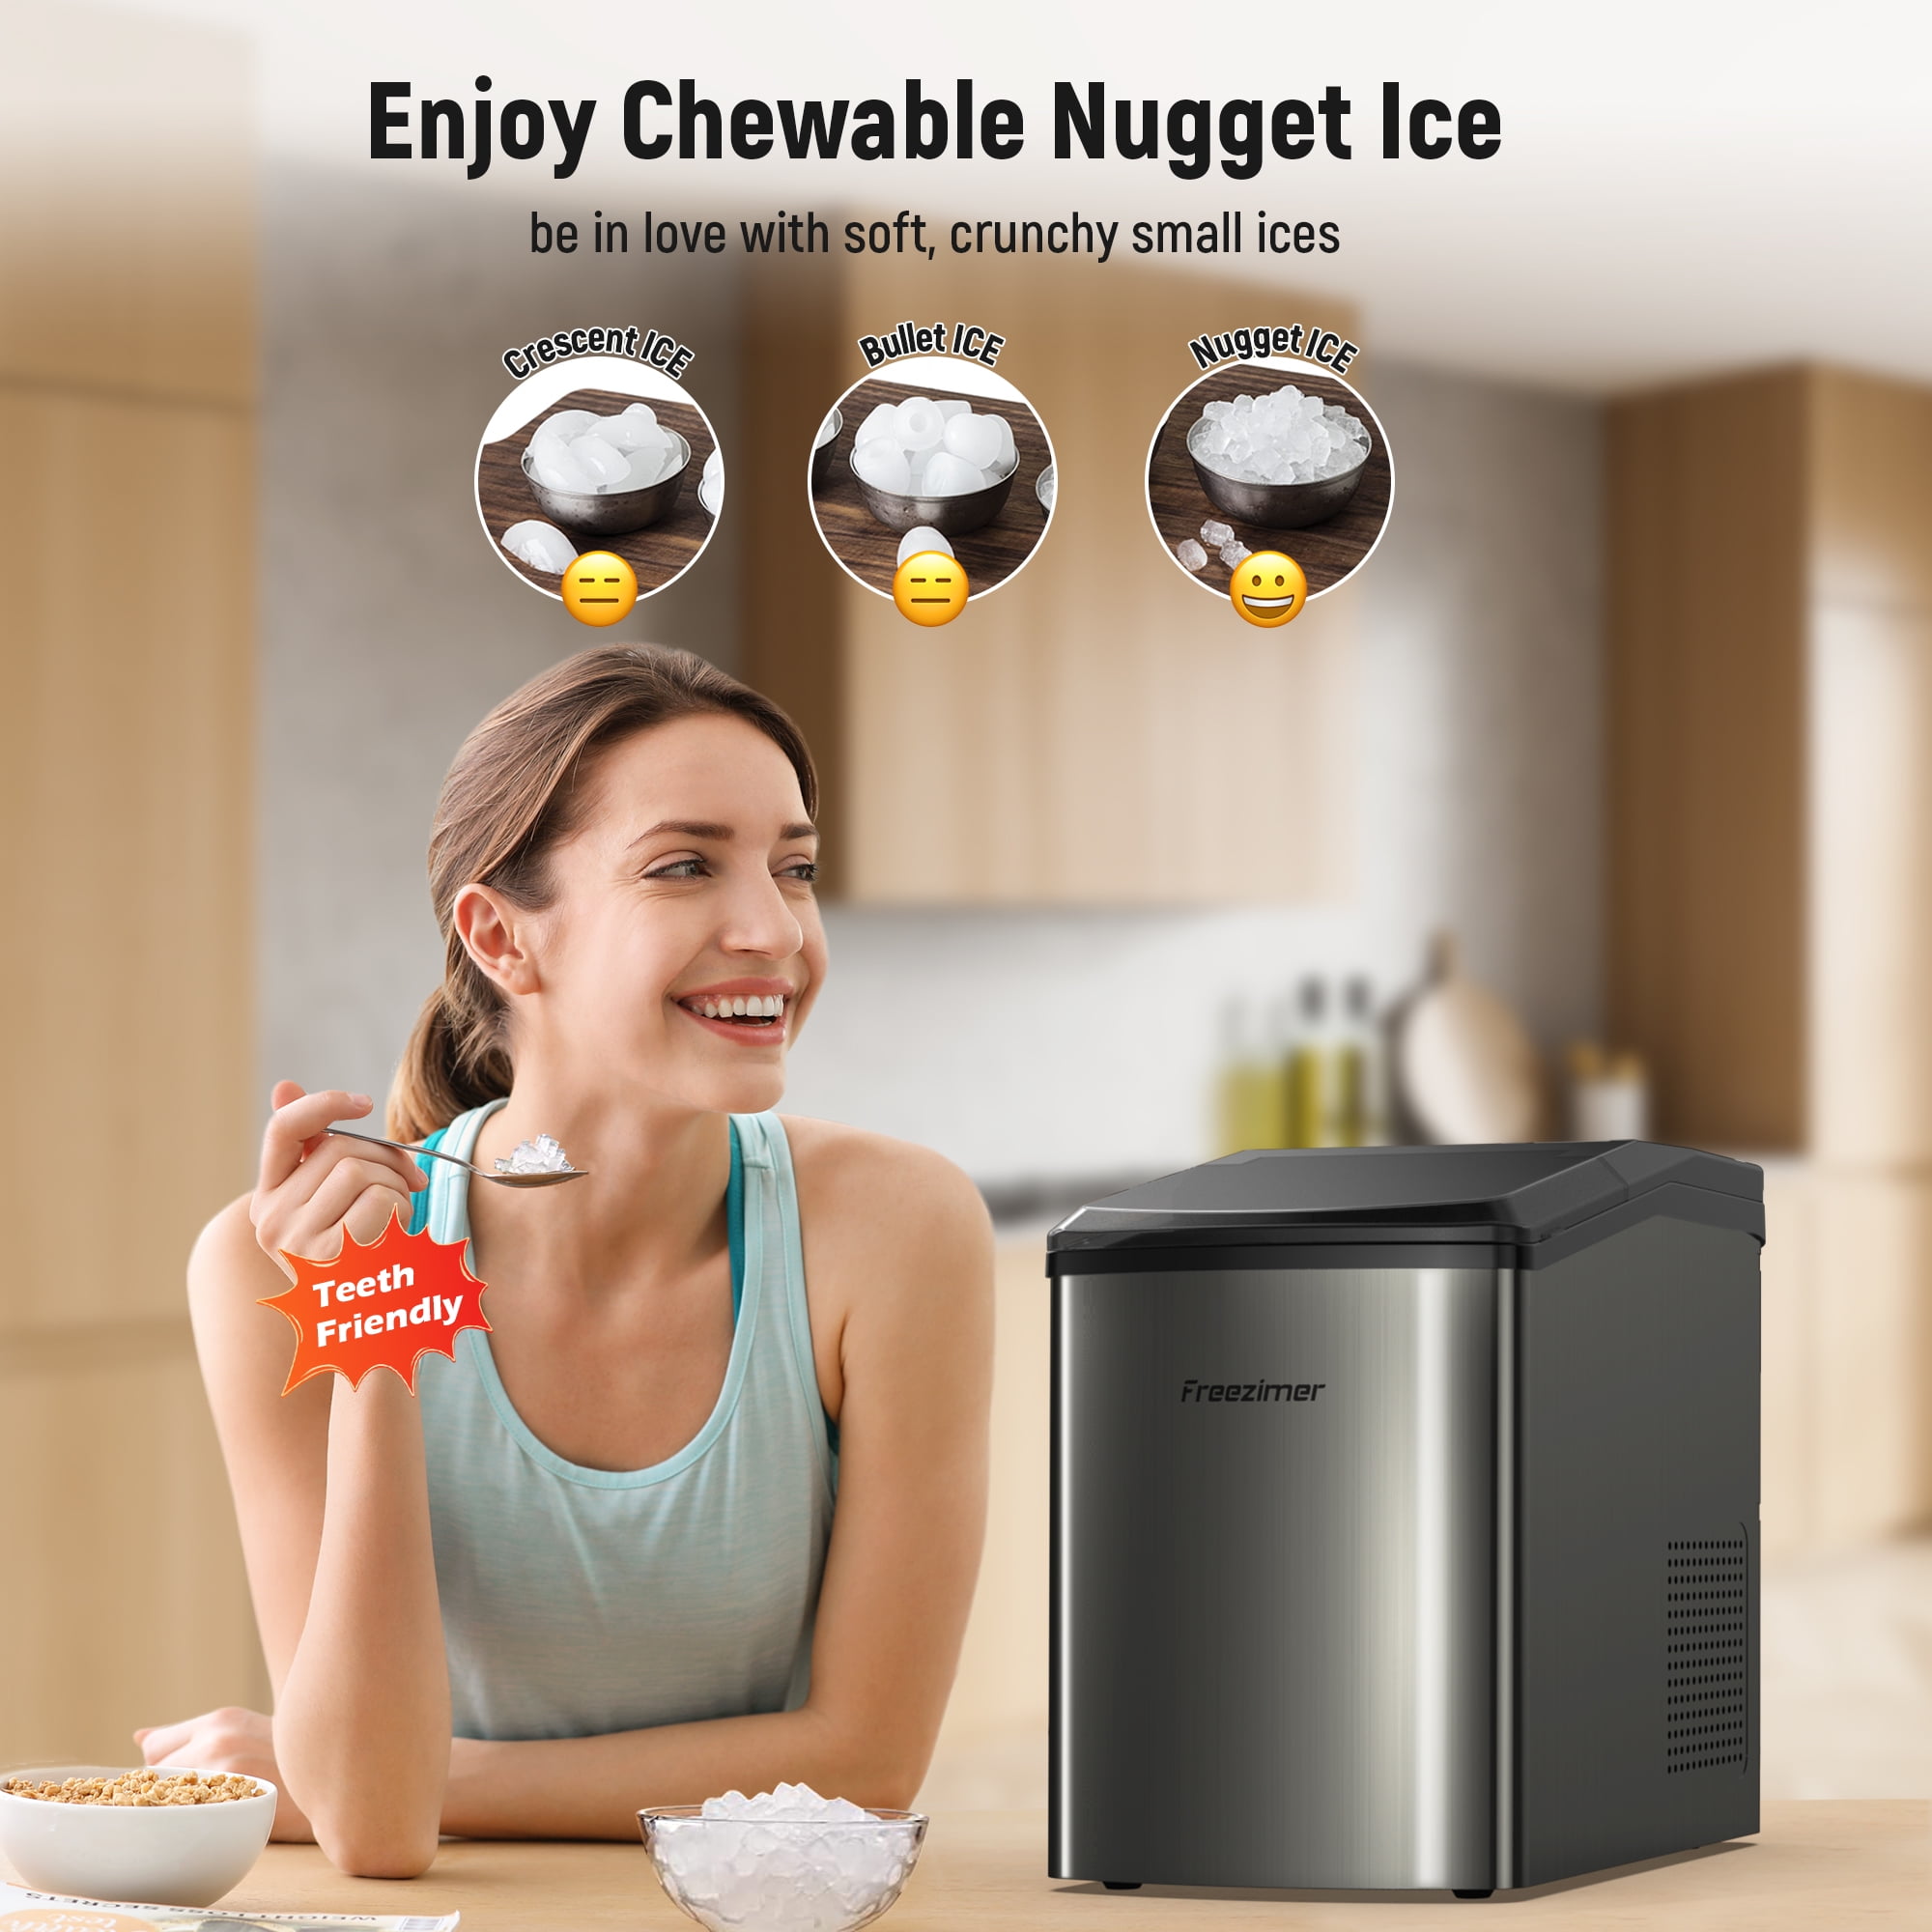 Freezimer DIM-30A Countertop Crunchy Chewable Nugget Ice Maker